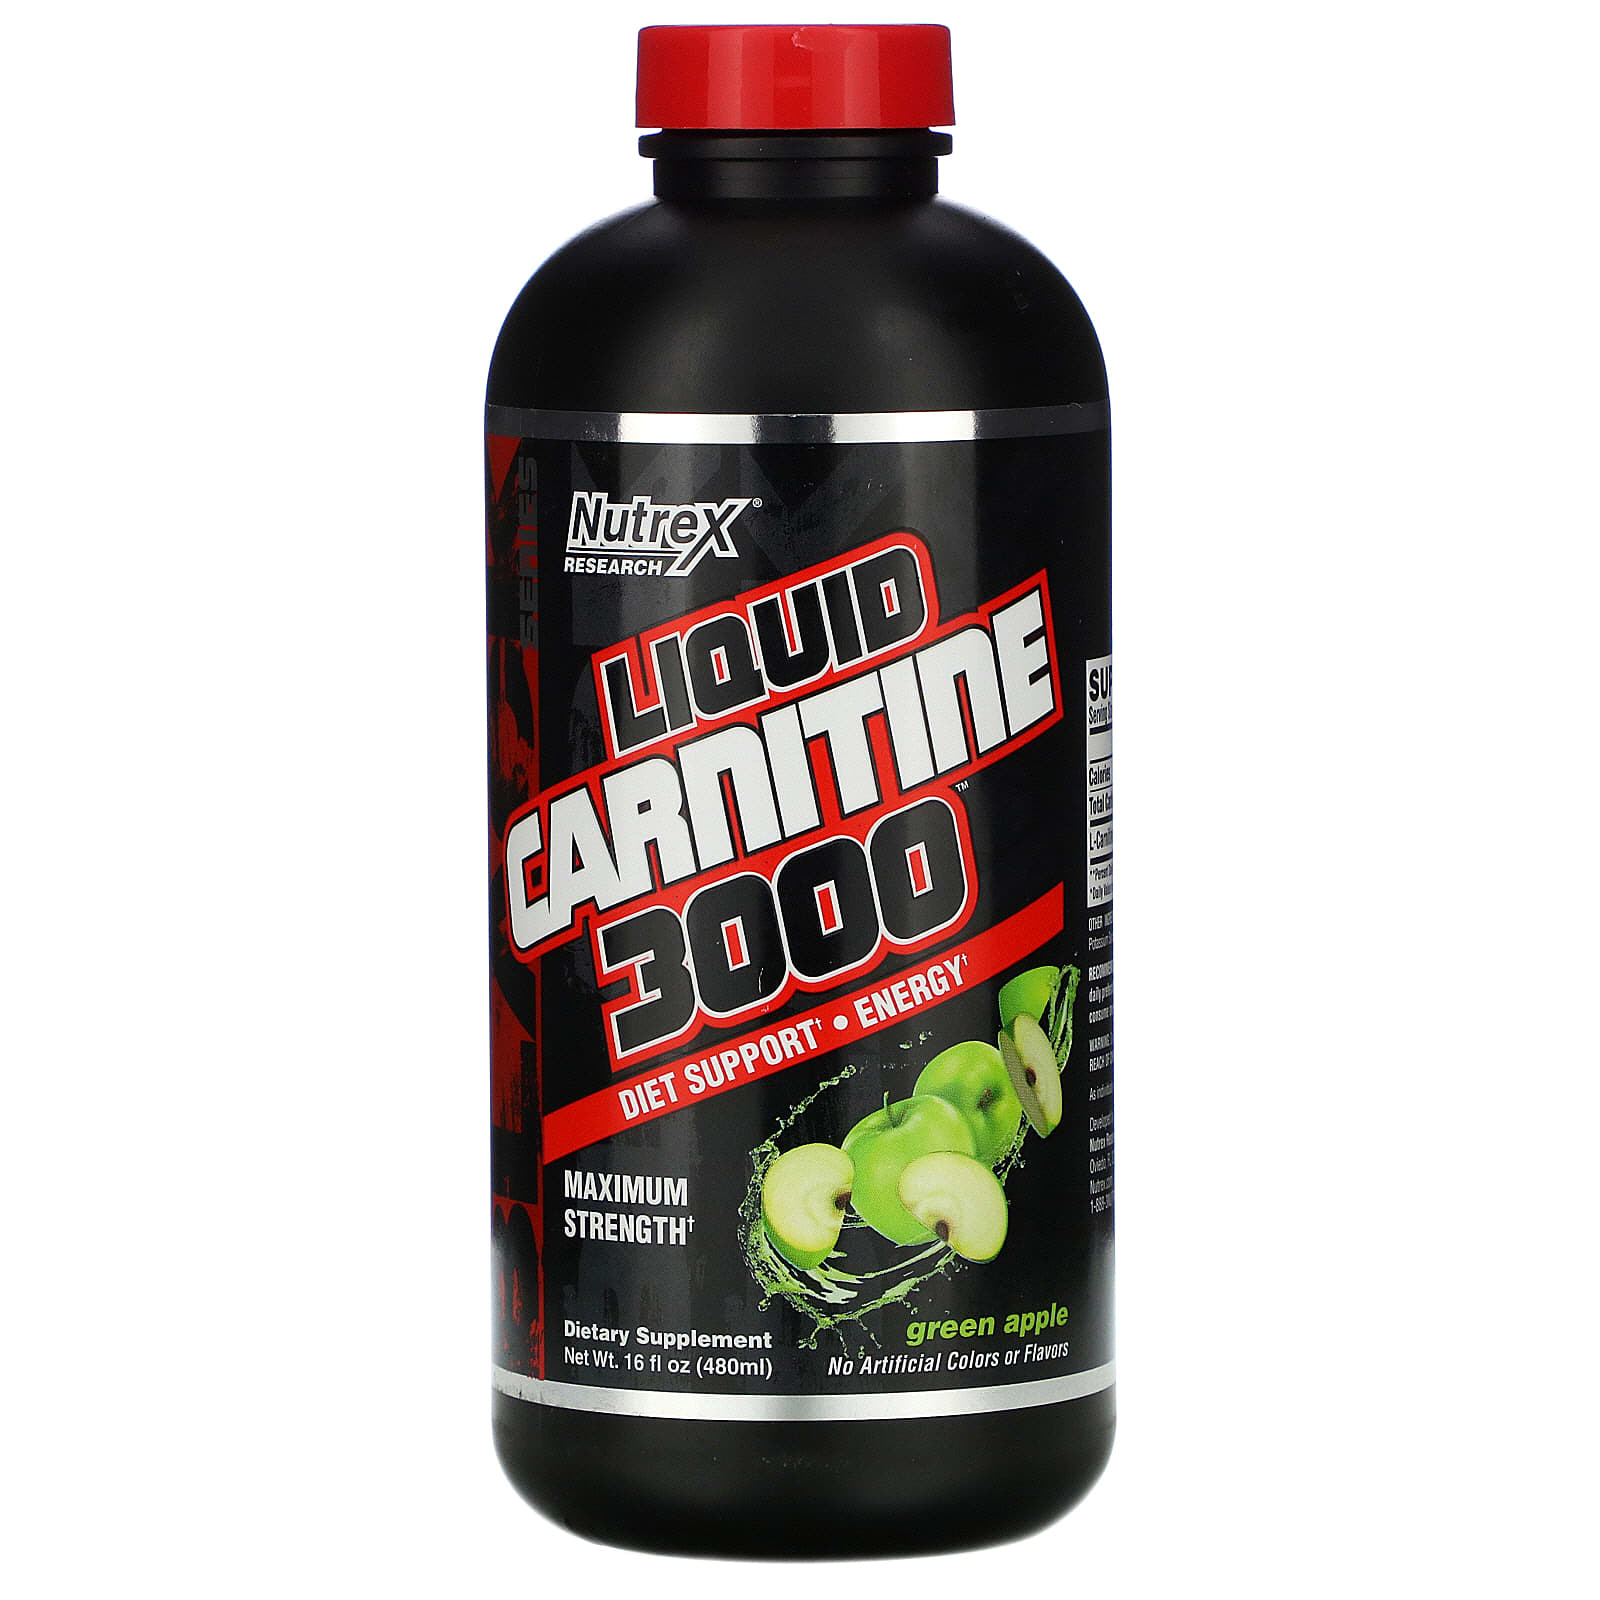 Black Series - Liquid Carnitine 3000 - Green Apple - 16 fl oz (480 ml) - Nutrex Research